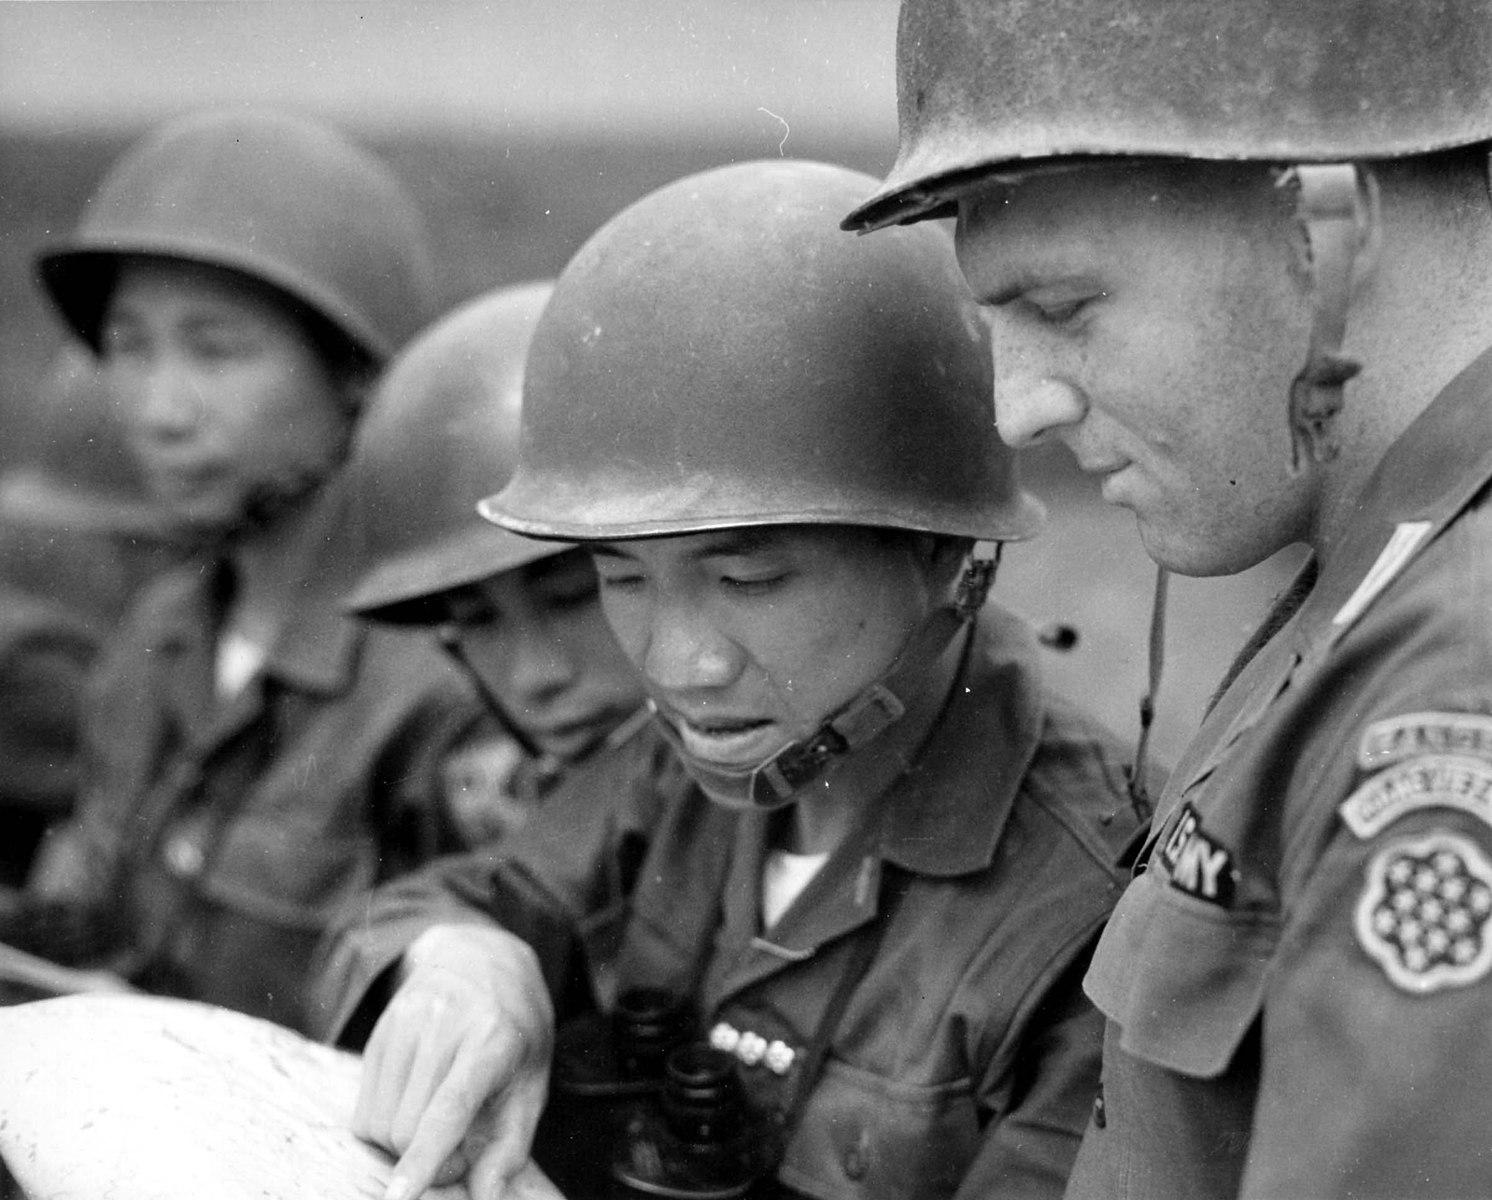 Vietnam: U.S. Army Advisor trains batallions in the field.